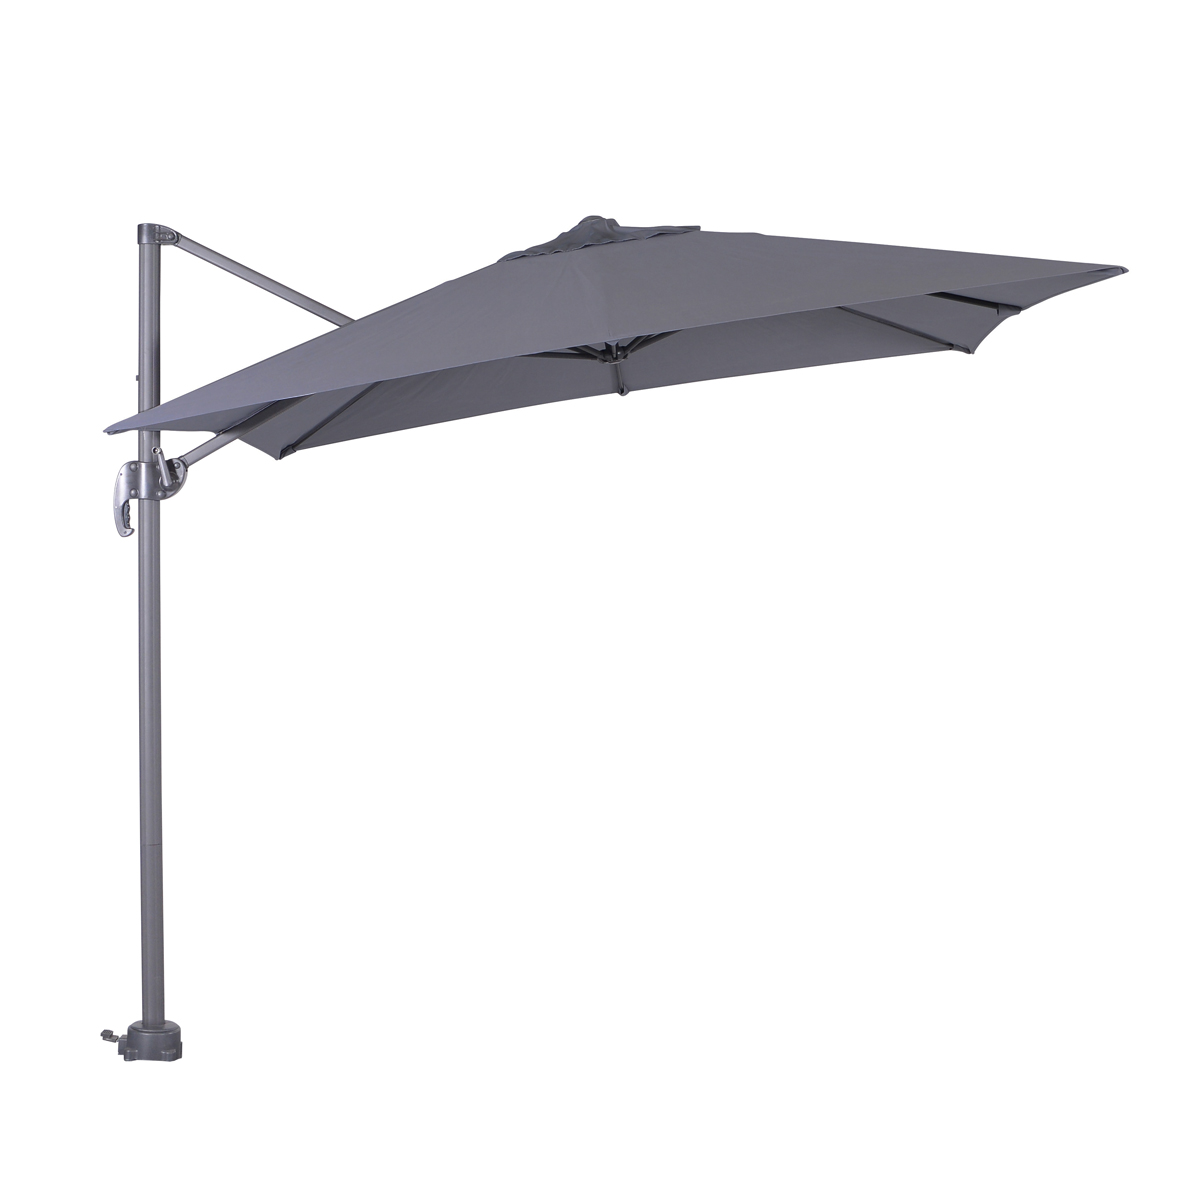 reactie Conceit Begunstigde Aluminium zwevende parasol kleur donkergrijs 2,5 x 2,5 m. promo € 229 - De  tuin van Eden